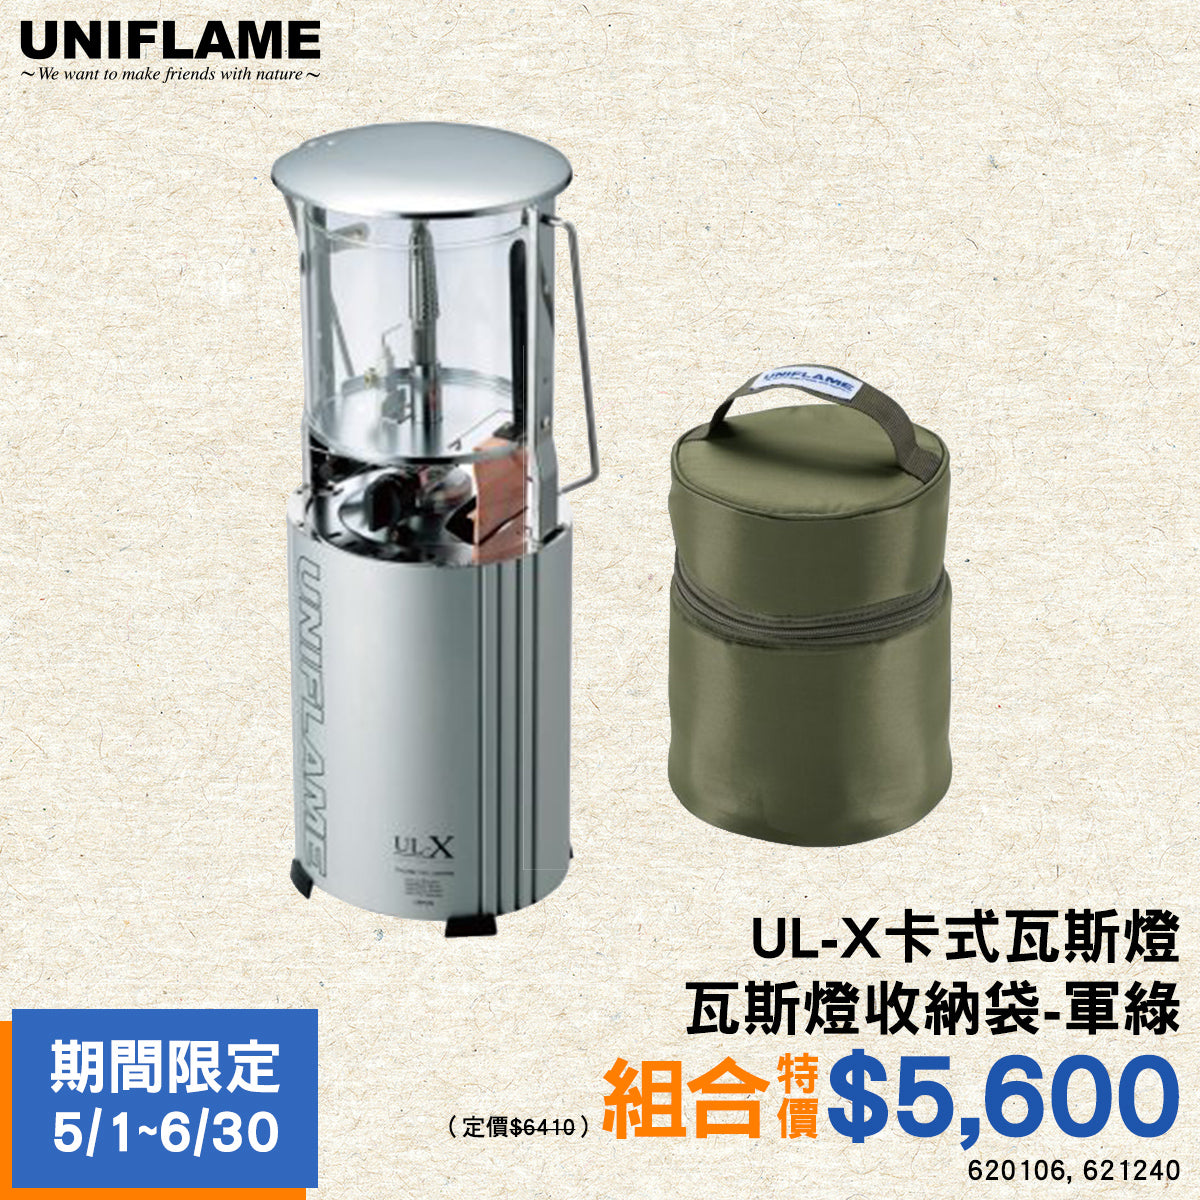 UNIFLAME UL-X卡式瓦斯燈 200W 亮度 620106